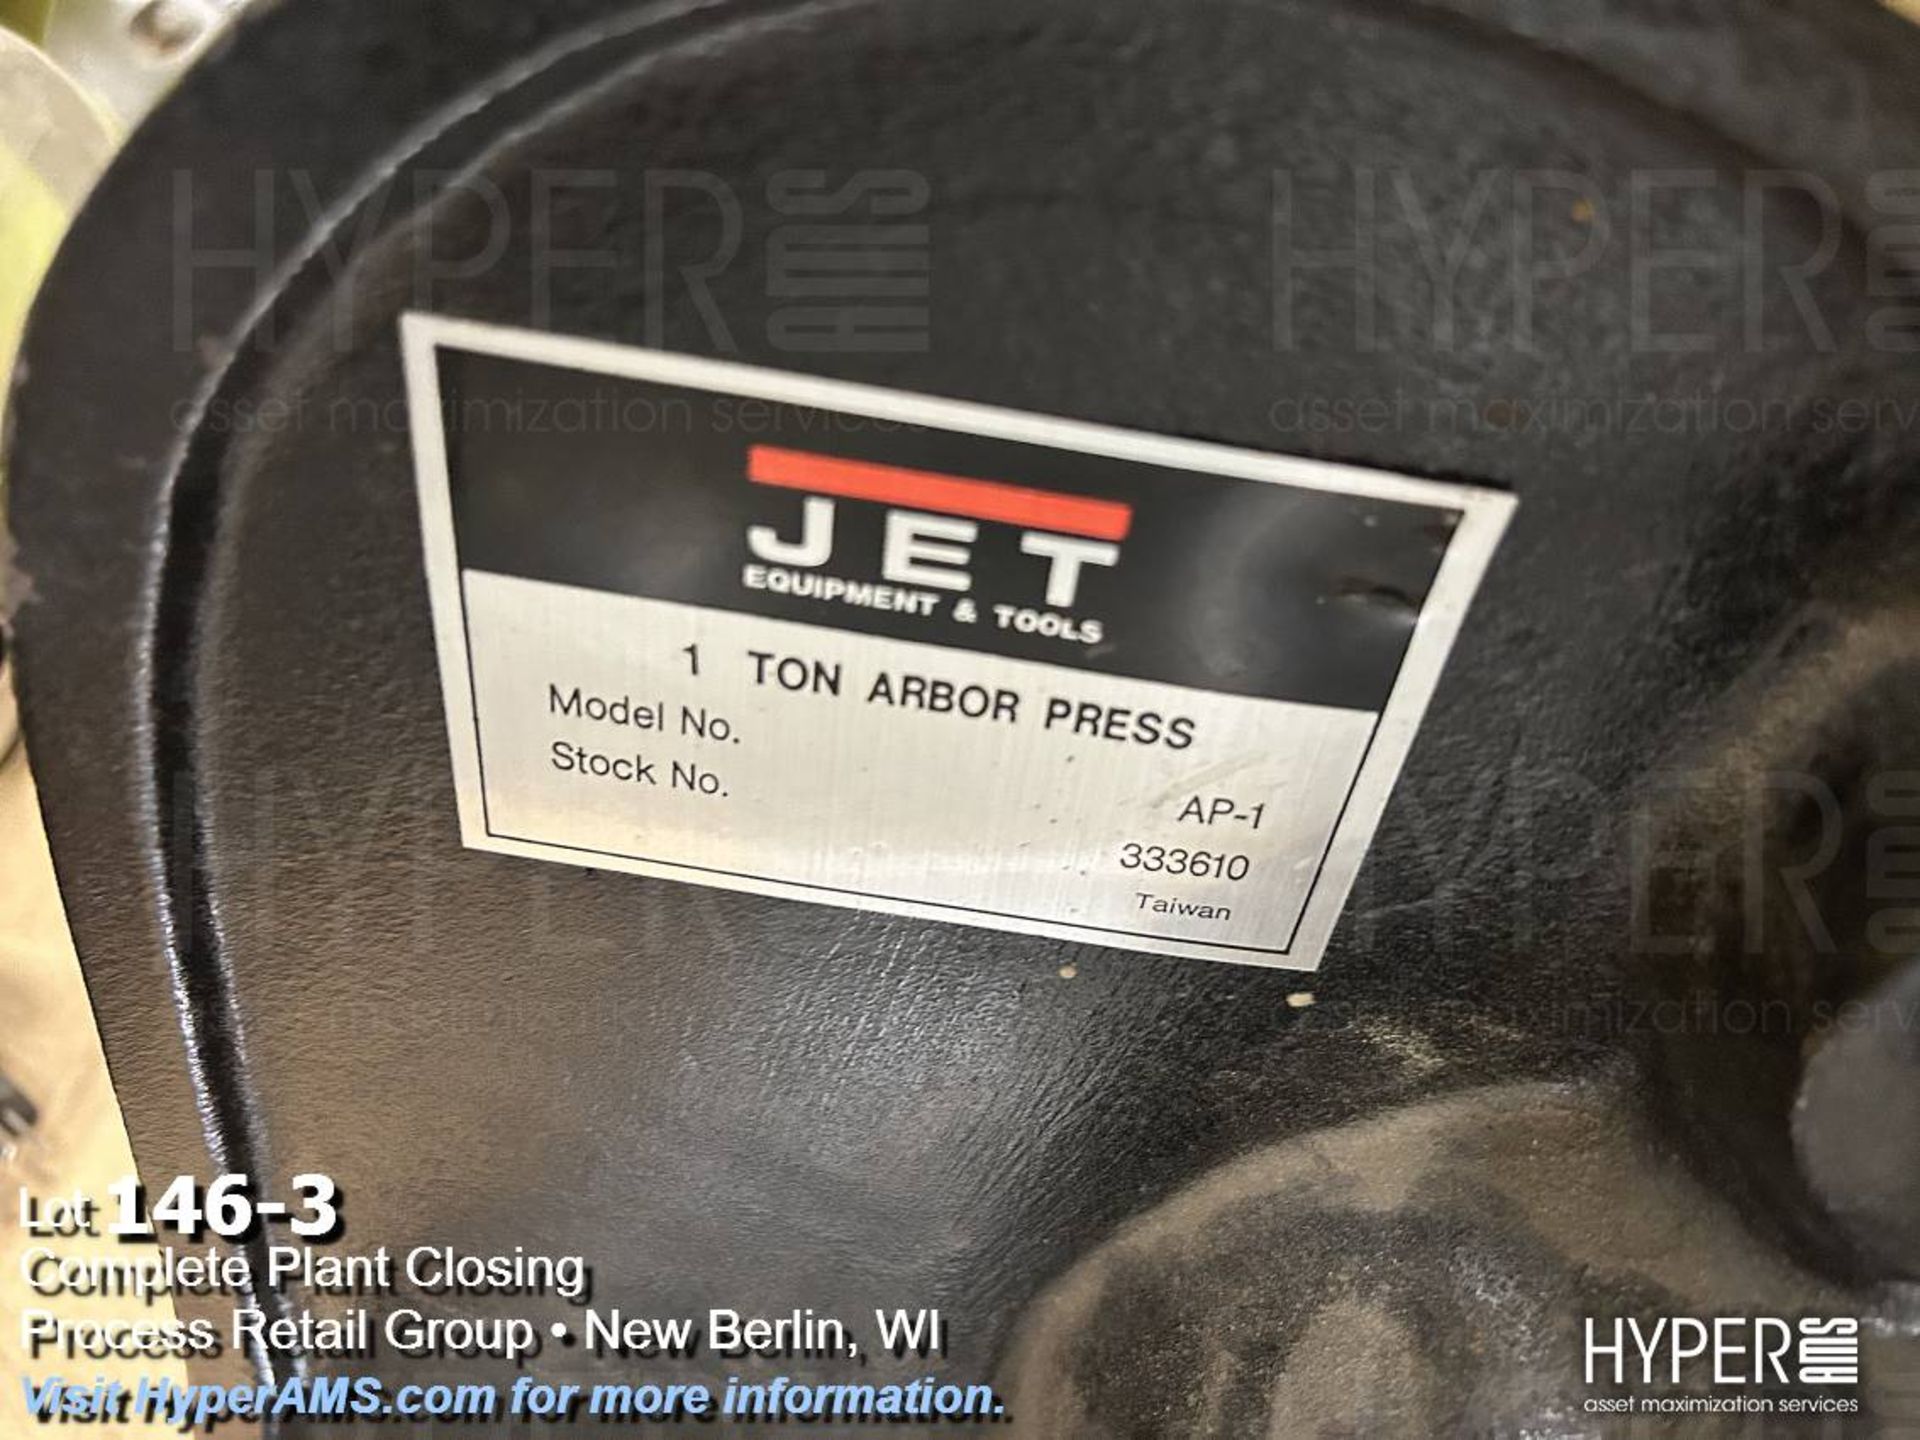 Jet 1 ton arbor press - Image 3 of 3